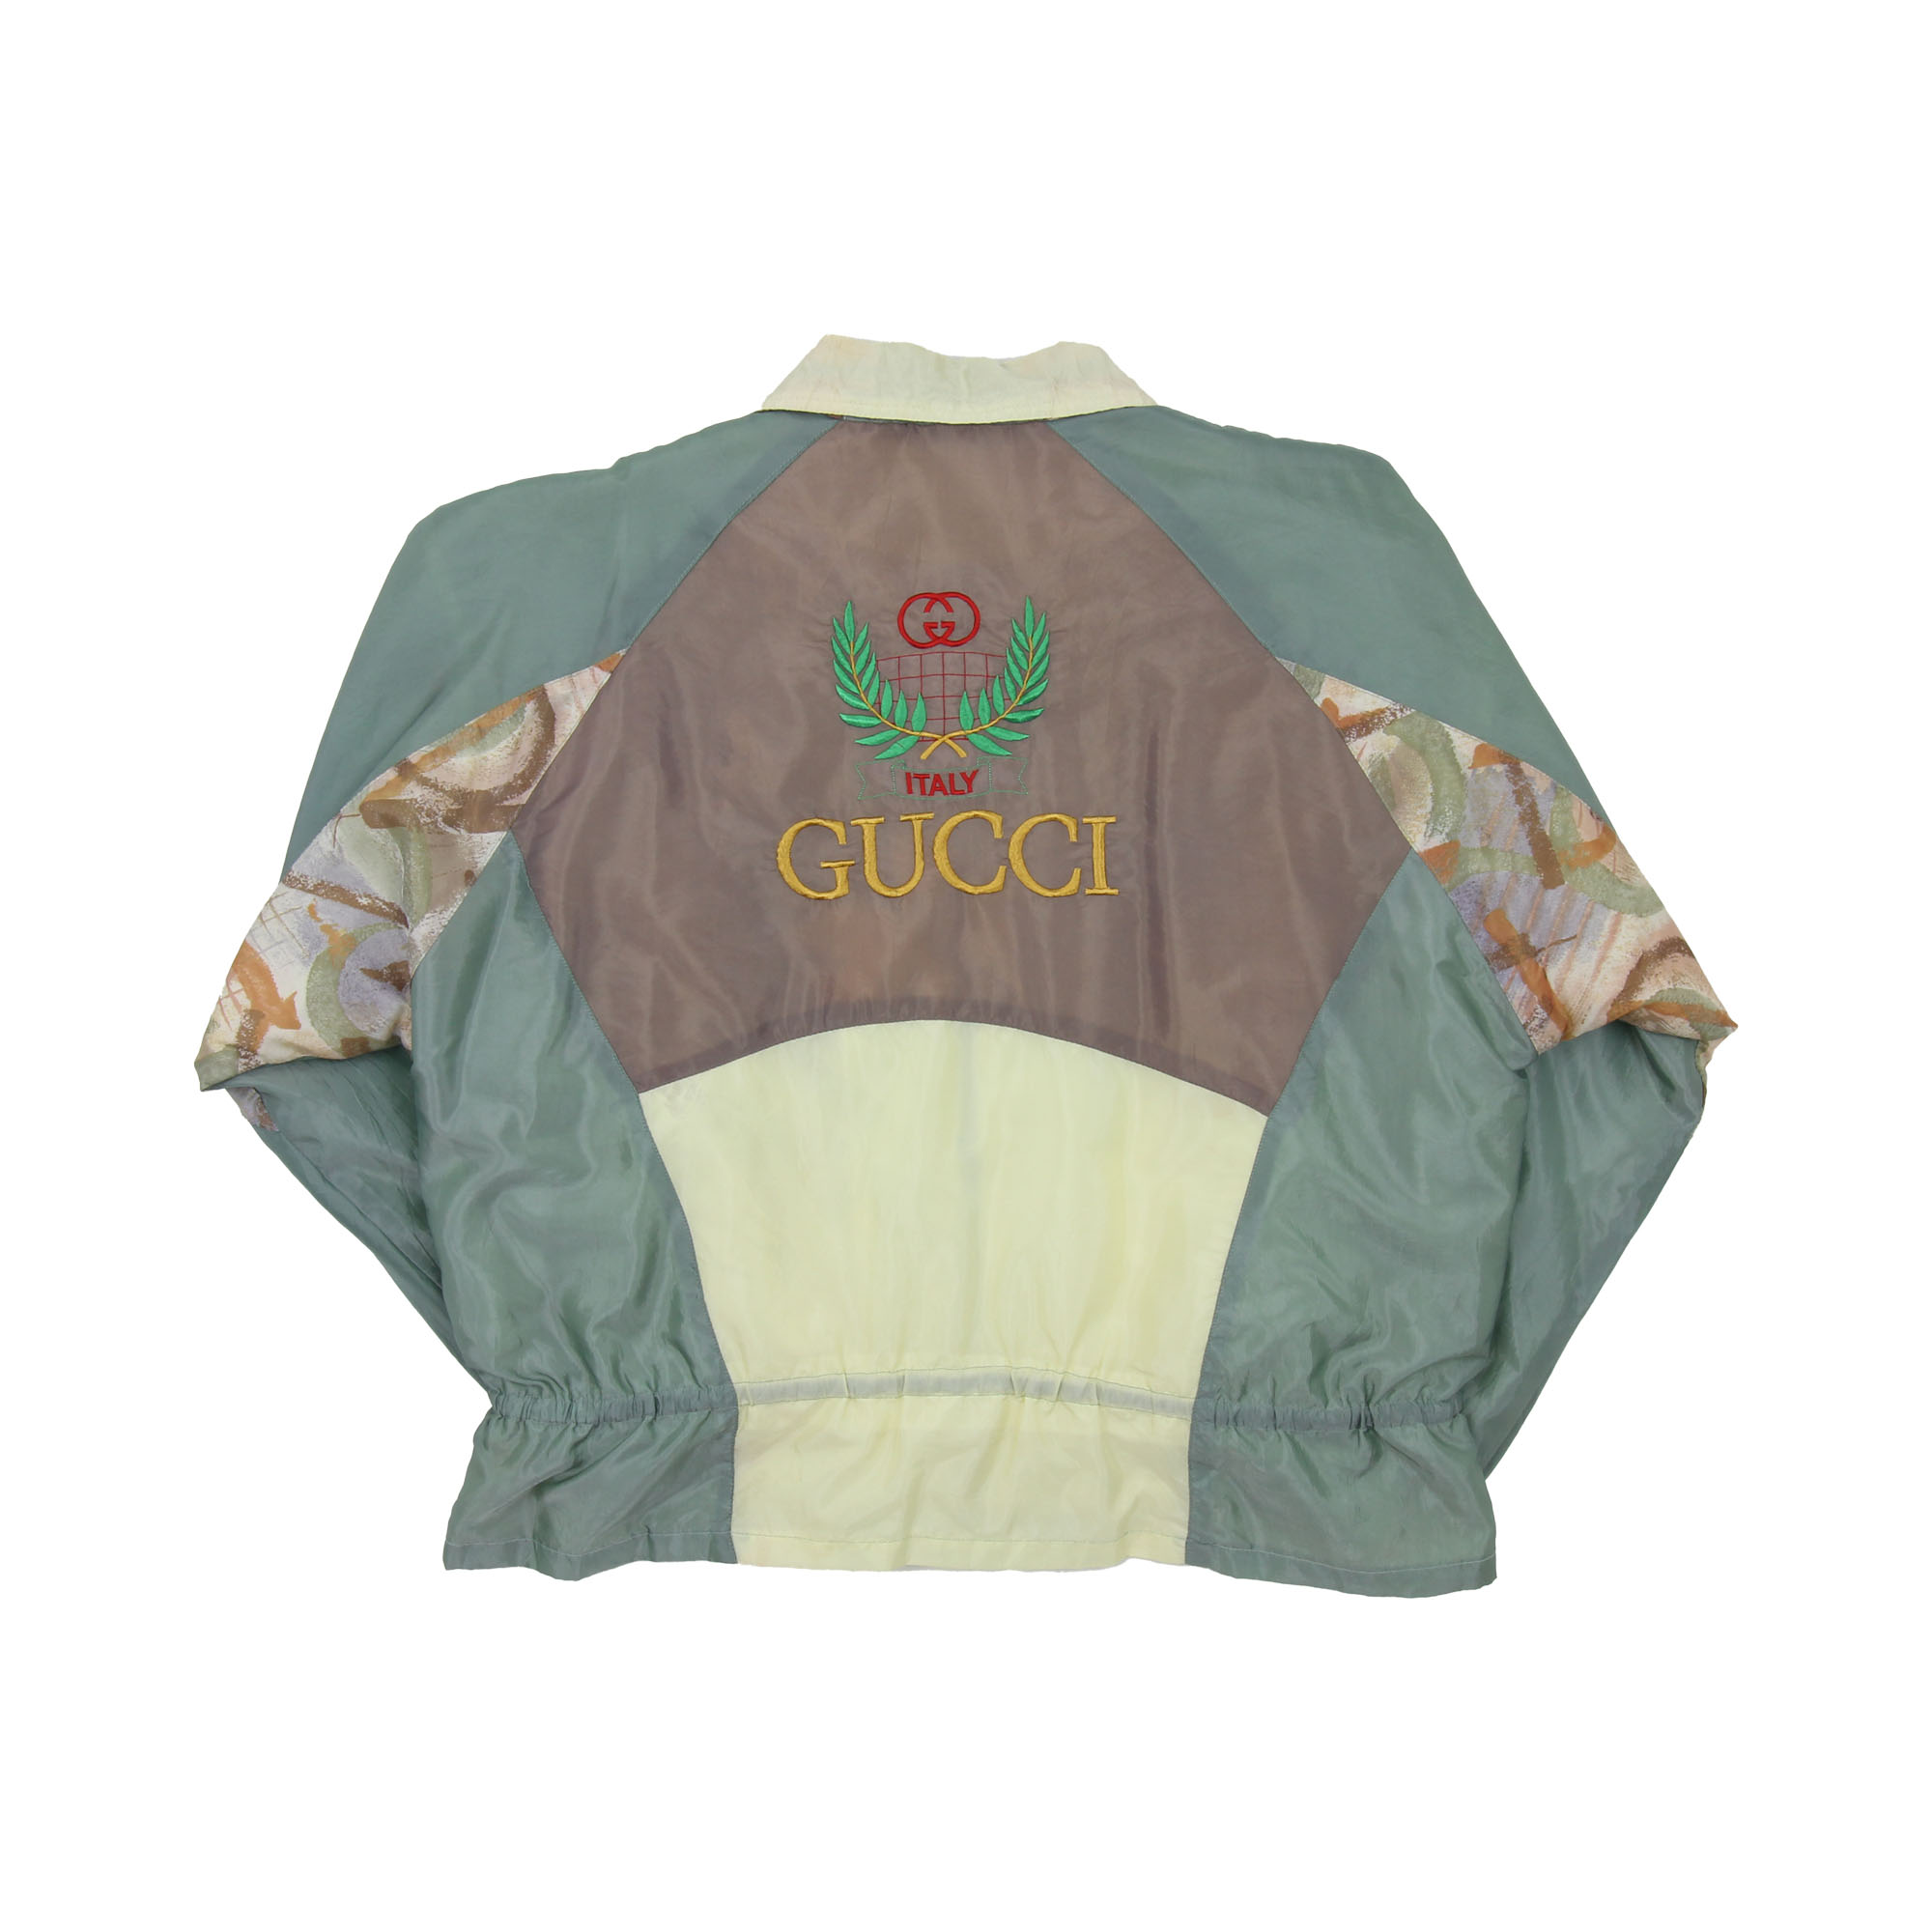 Gucci Bootleg Thin Jacket -  M/L